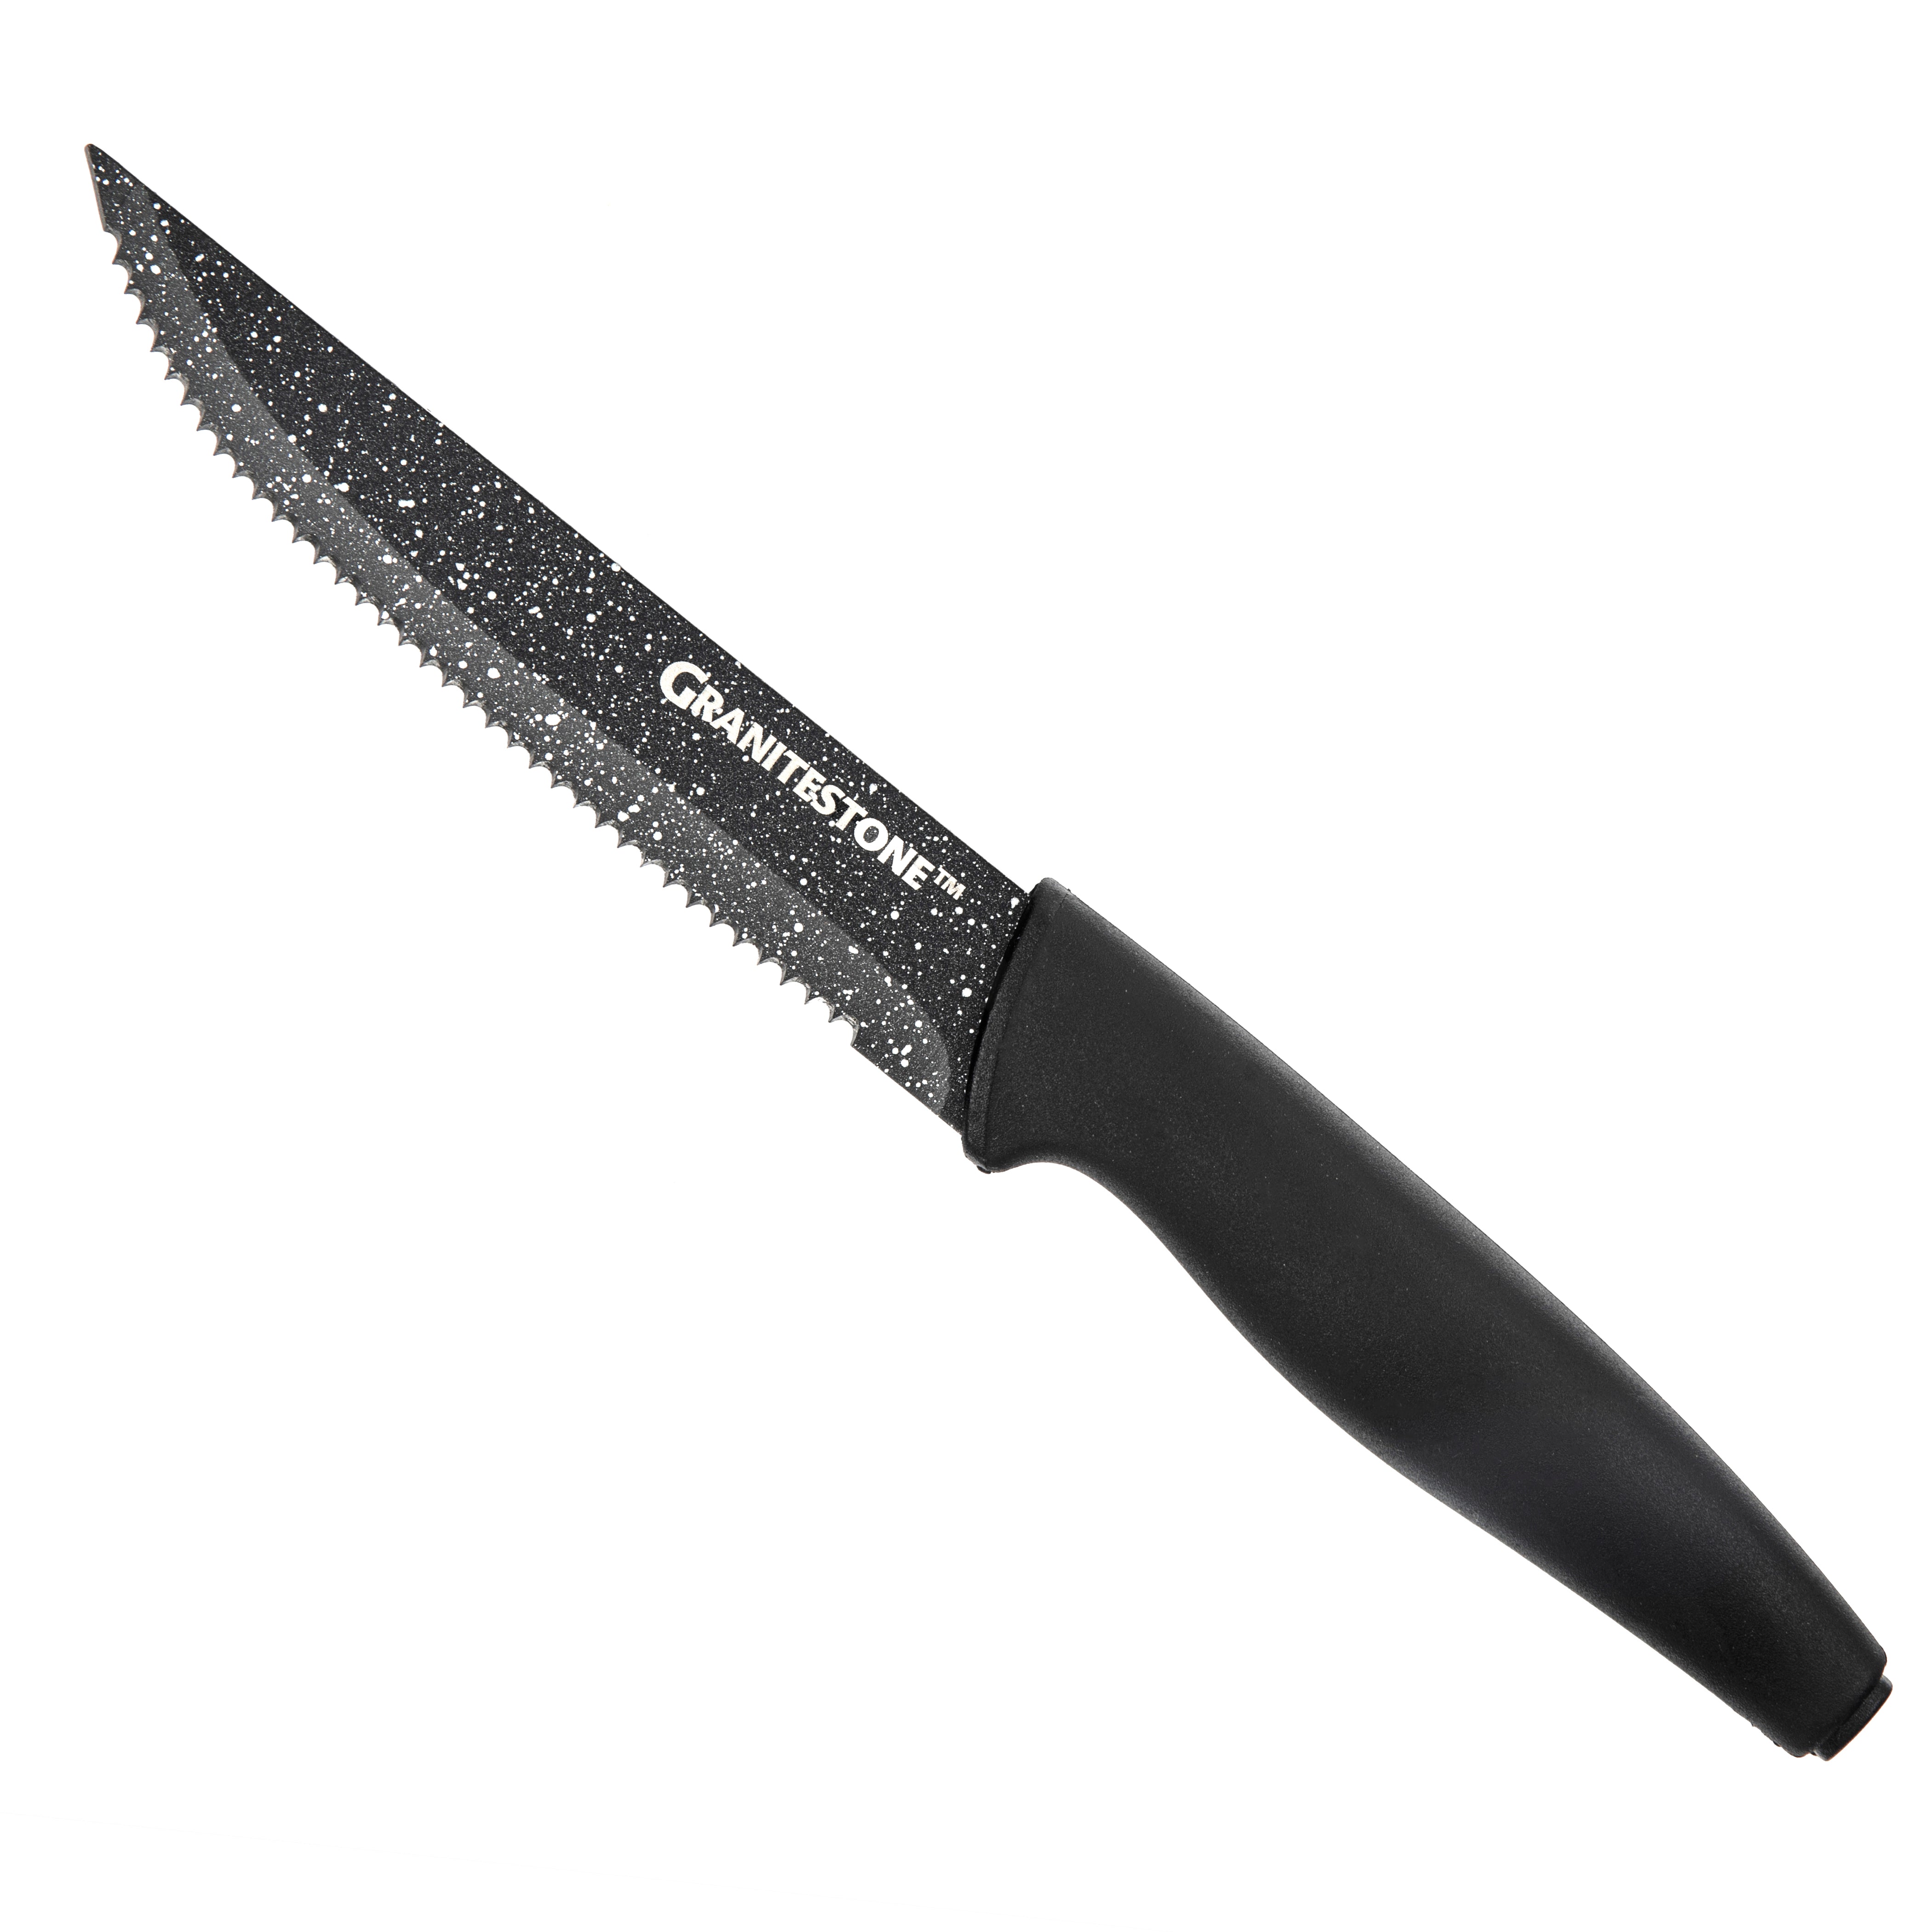 Granitestone Pro Nutriblade 14-Piece Knife Set with Block ,Black